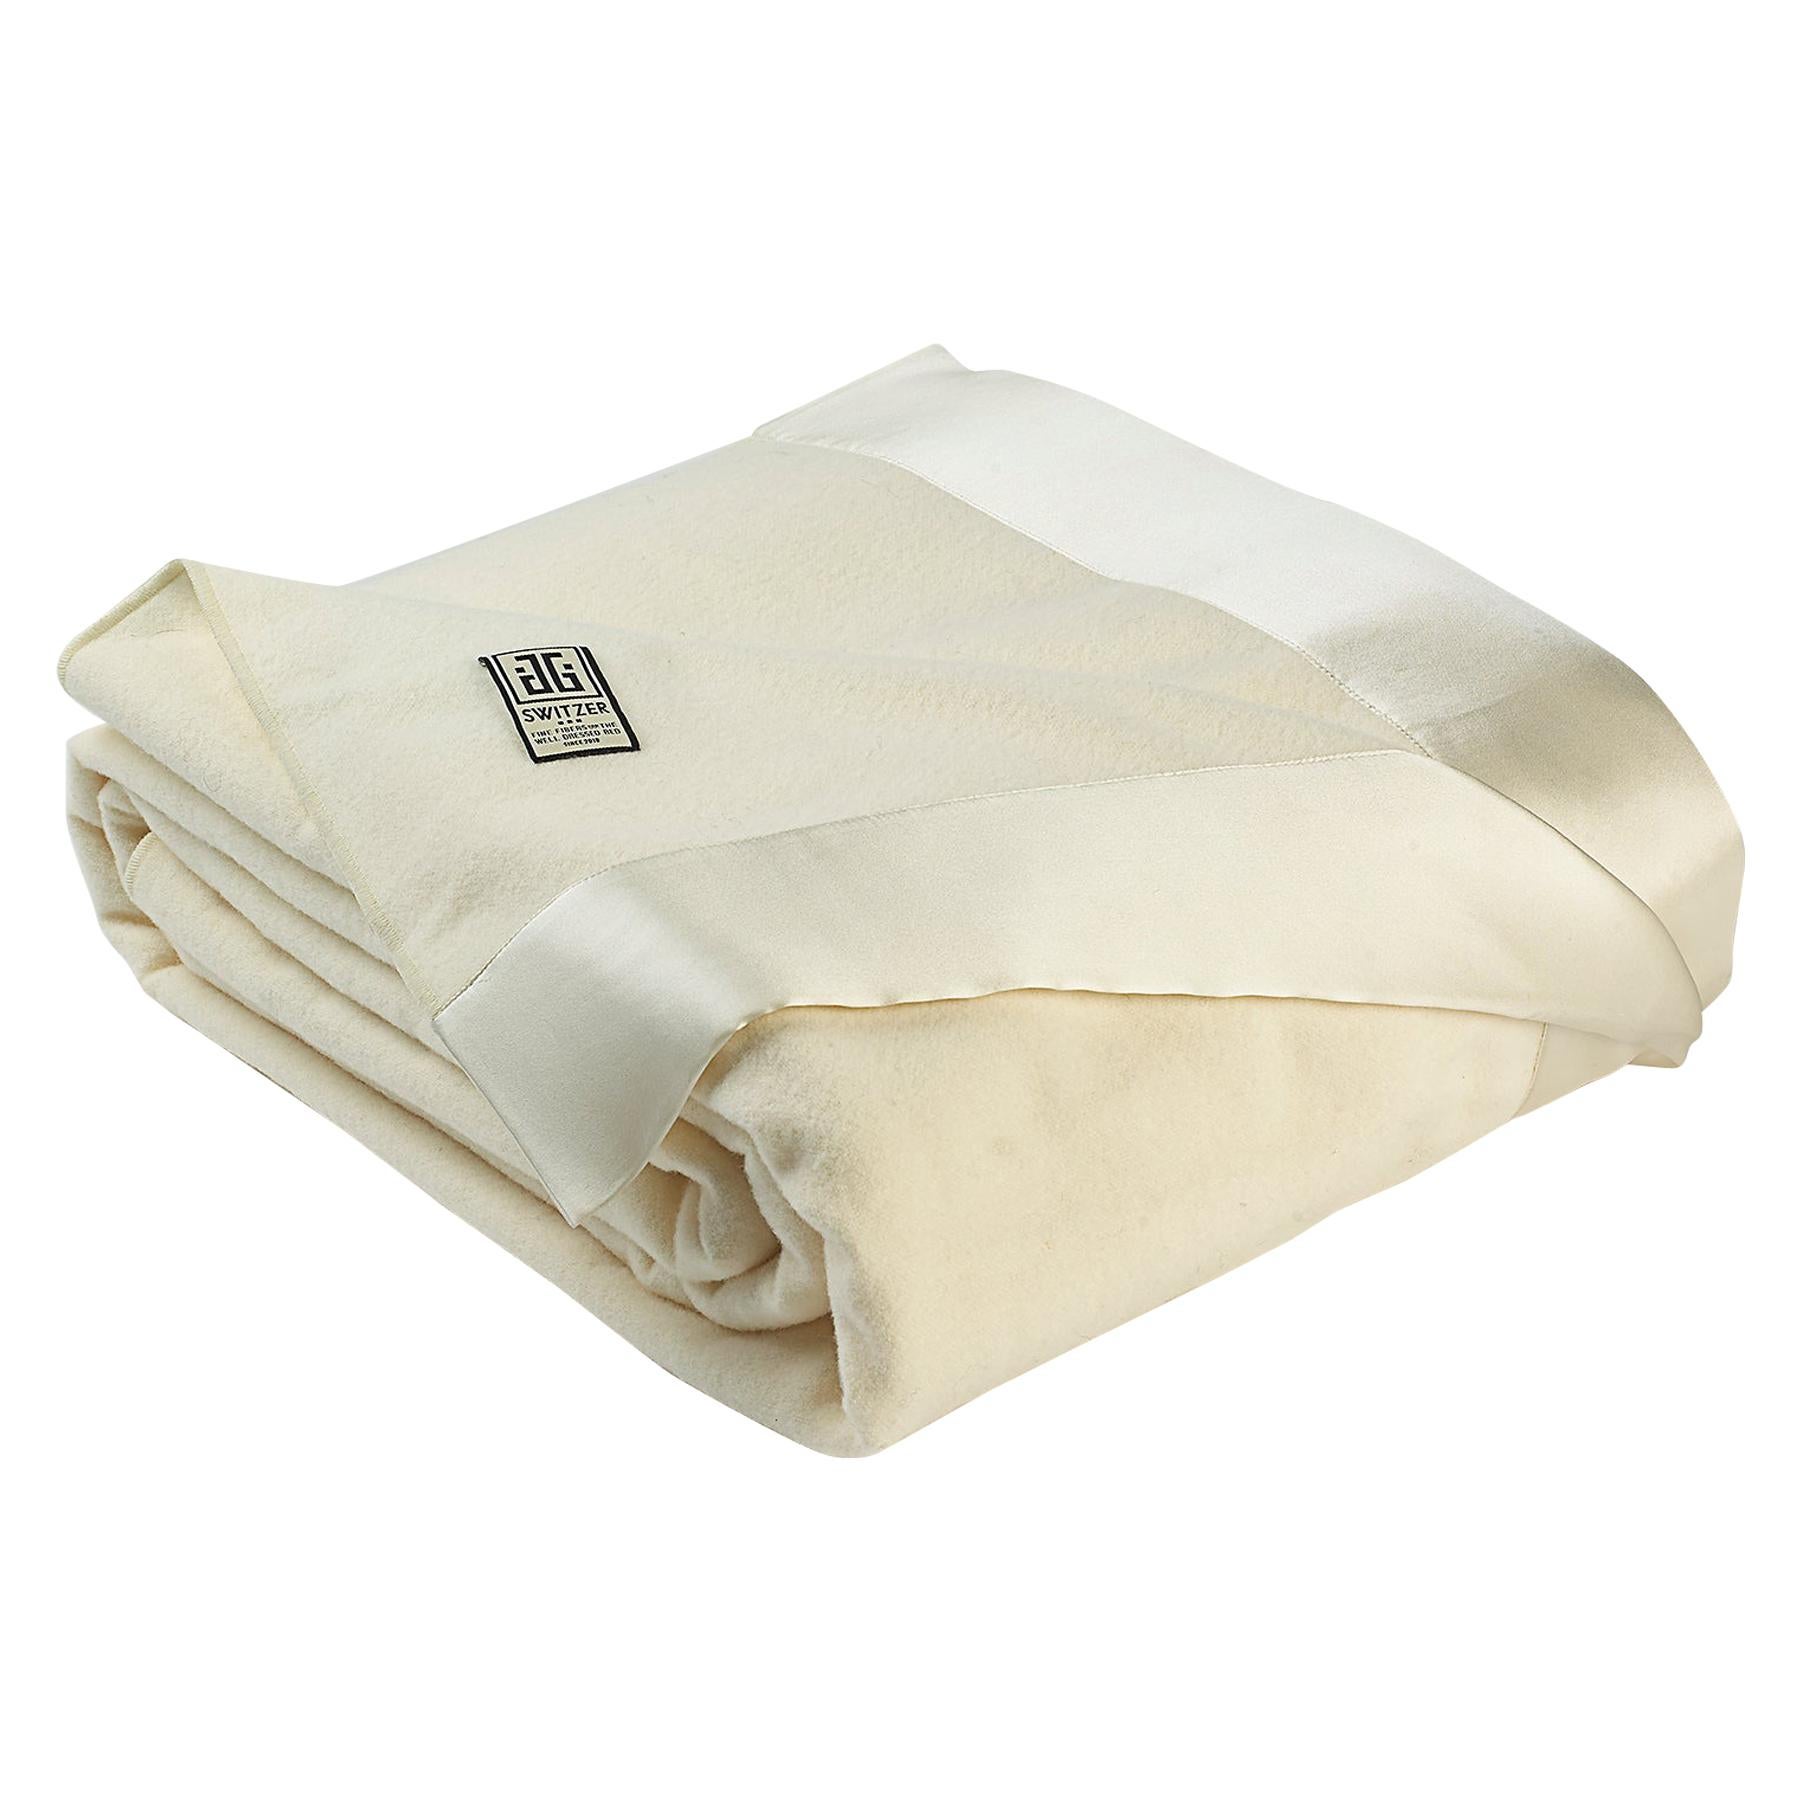 Henry Merino White King-Size Blanket with Silk Border by JG Switzer For Sale